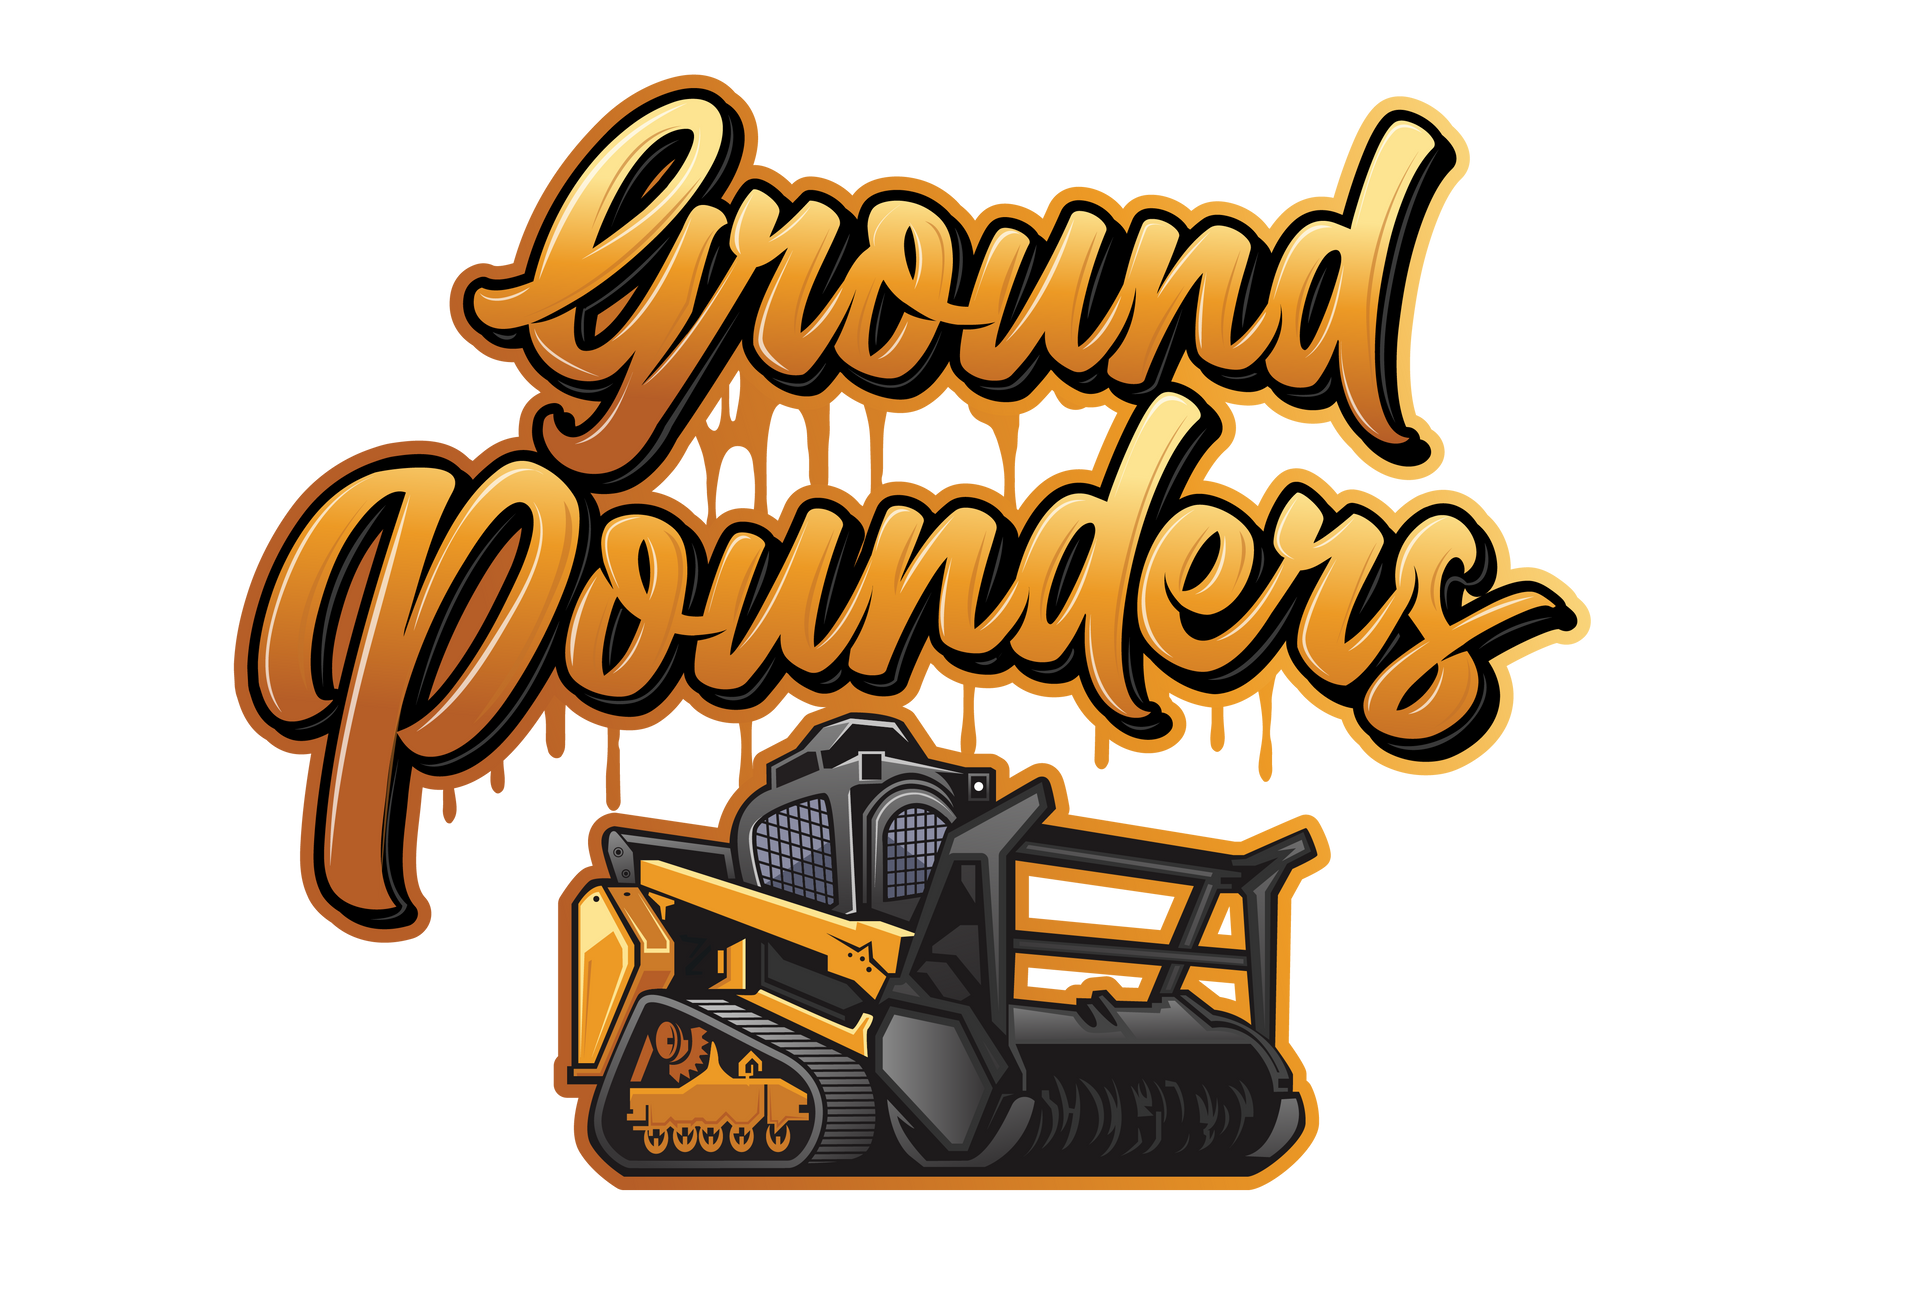 Ground Pounders